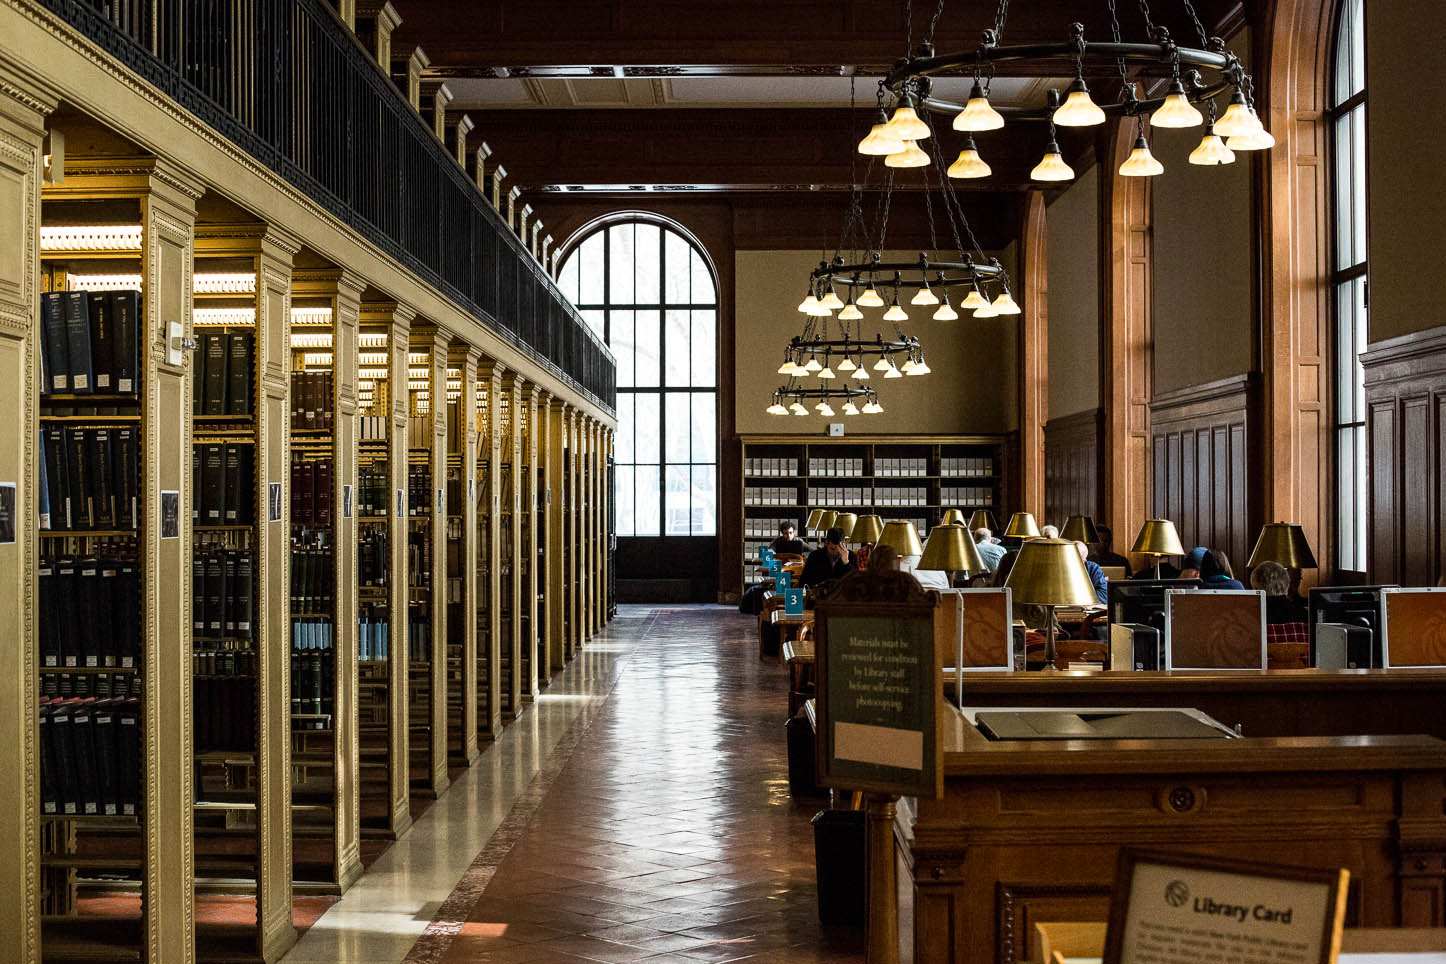  New York City, New York Public Library 